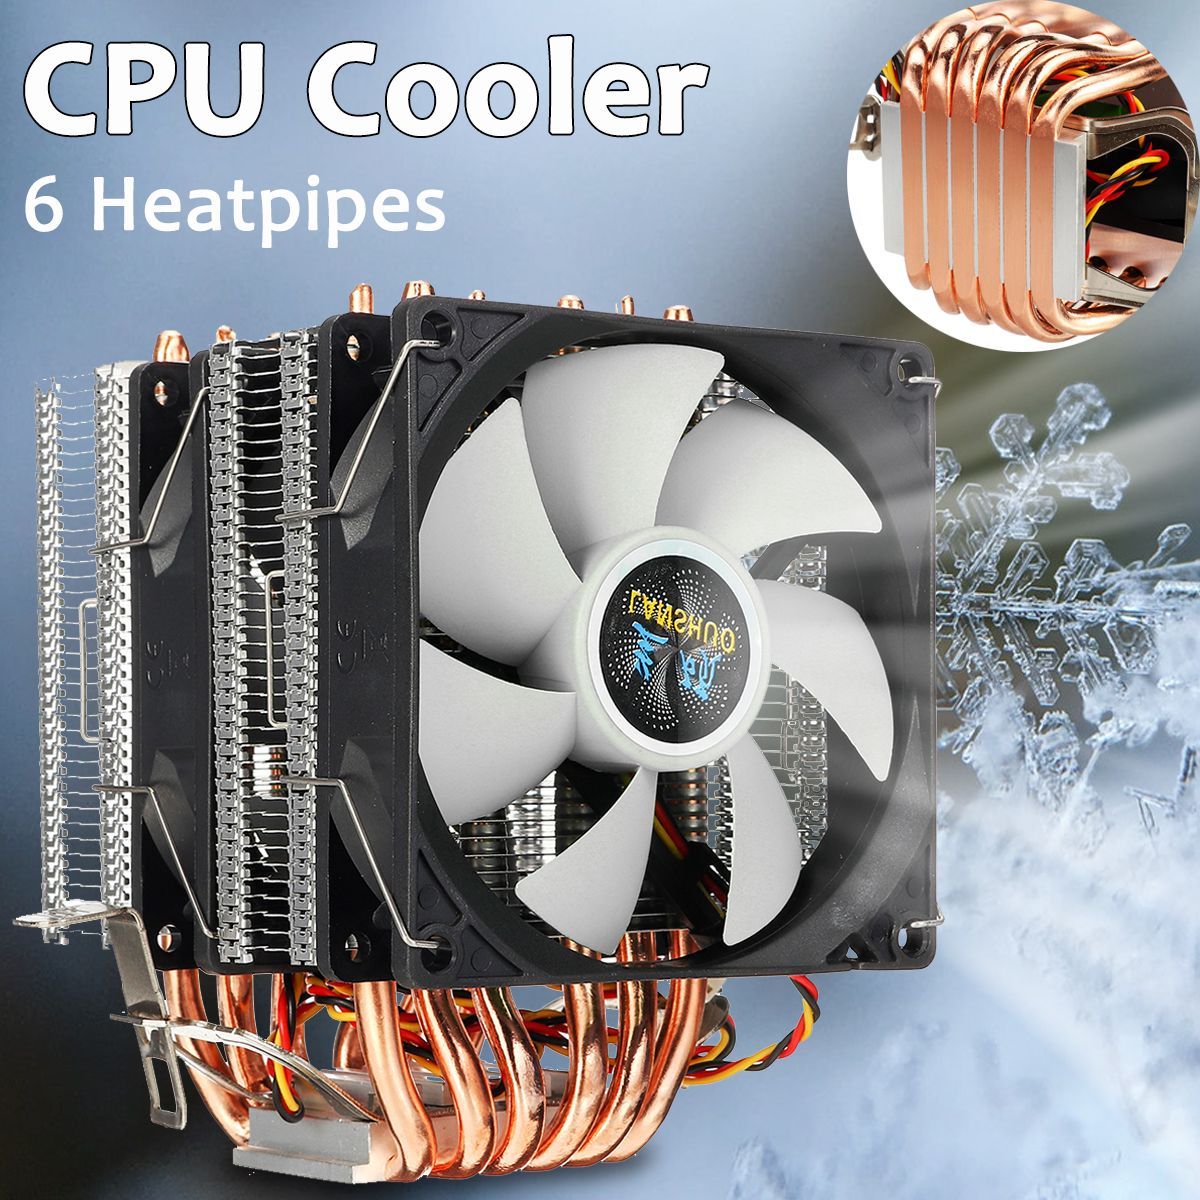 Aurora-3-Pin-Double-Fan-6-Copper-Tube-Dual-Tower-CPU-Cooling-Fan-Cooler-Heatsink-for-Intel-AMD-1633436